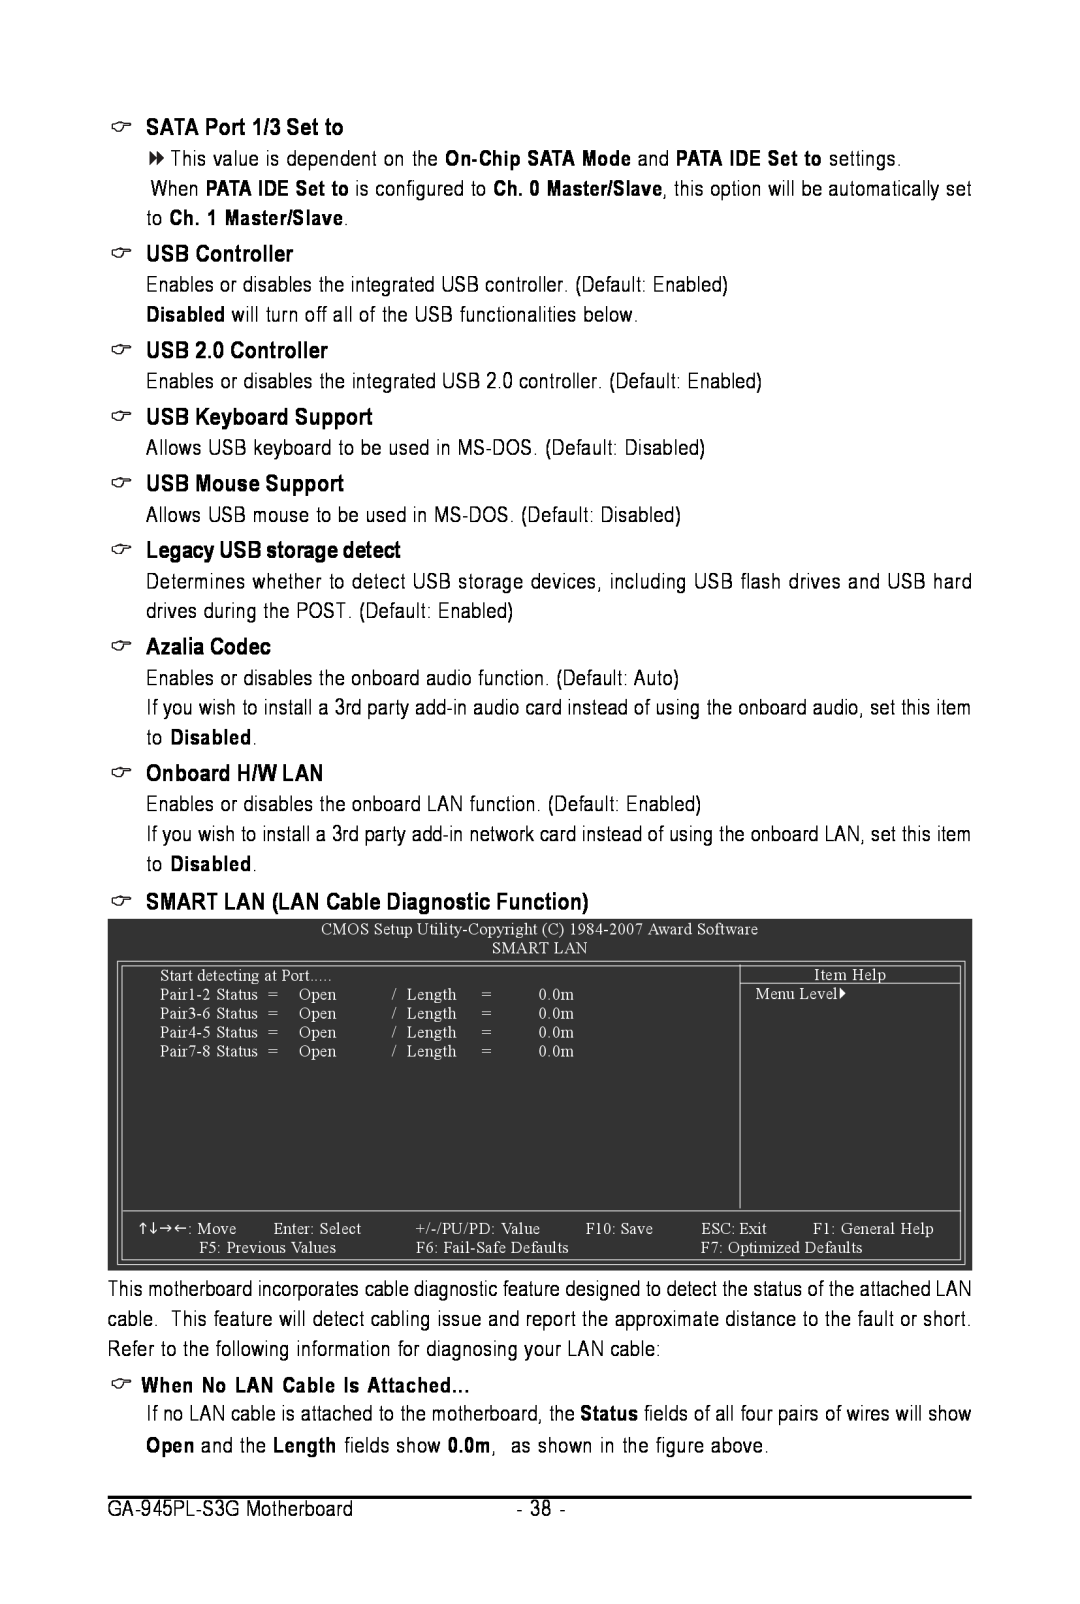 Intel GA-945PL-S3G SATA Port 1/3 Set to, USB Controller, USB 2.0 Controller, USB Keyboard Support, USB Mouse Support 